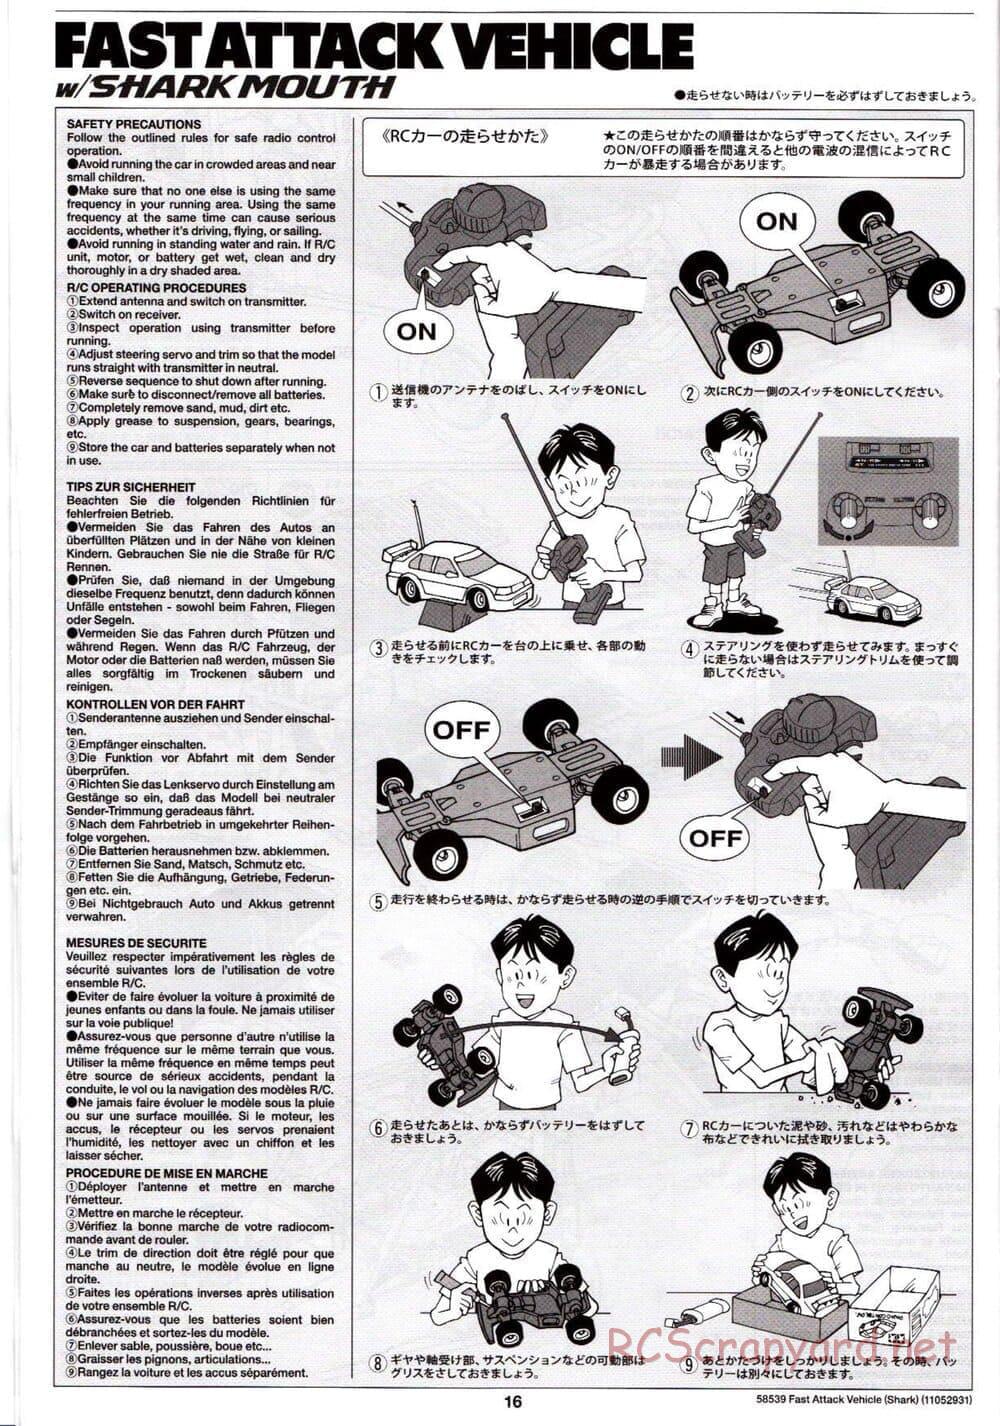 Tamiya - Fast Attack Vehicle w/ Shark Mouth - FAV Chassis - Manual - Page 16